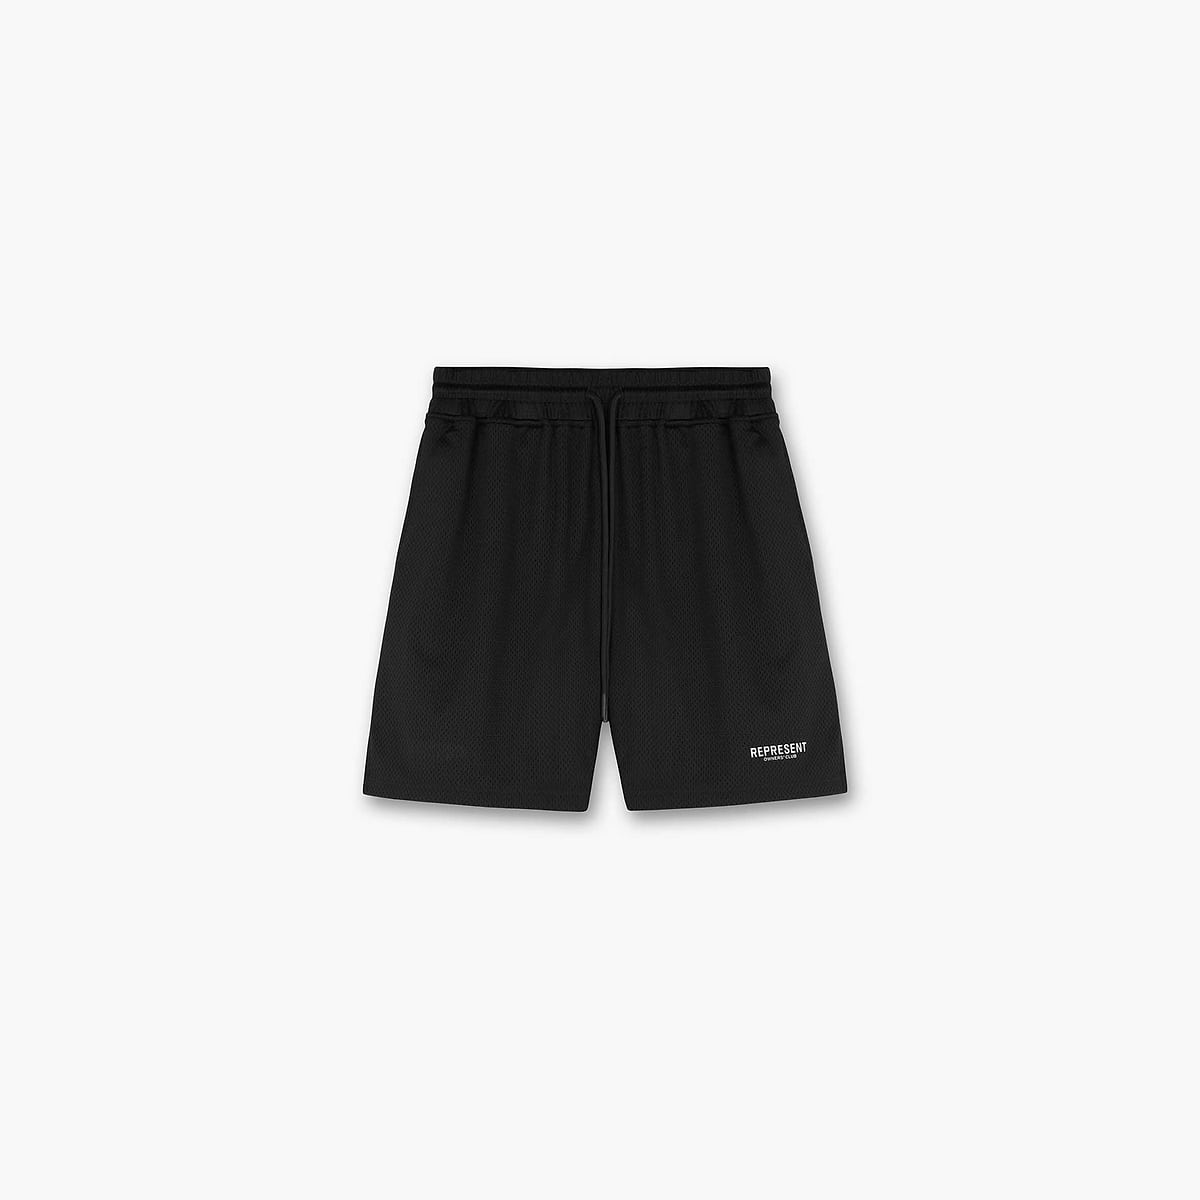 Represent Owners Club Mesh Shorts | Black Shorts | Represent ...